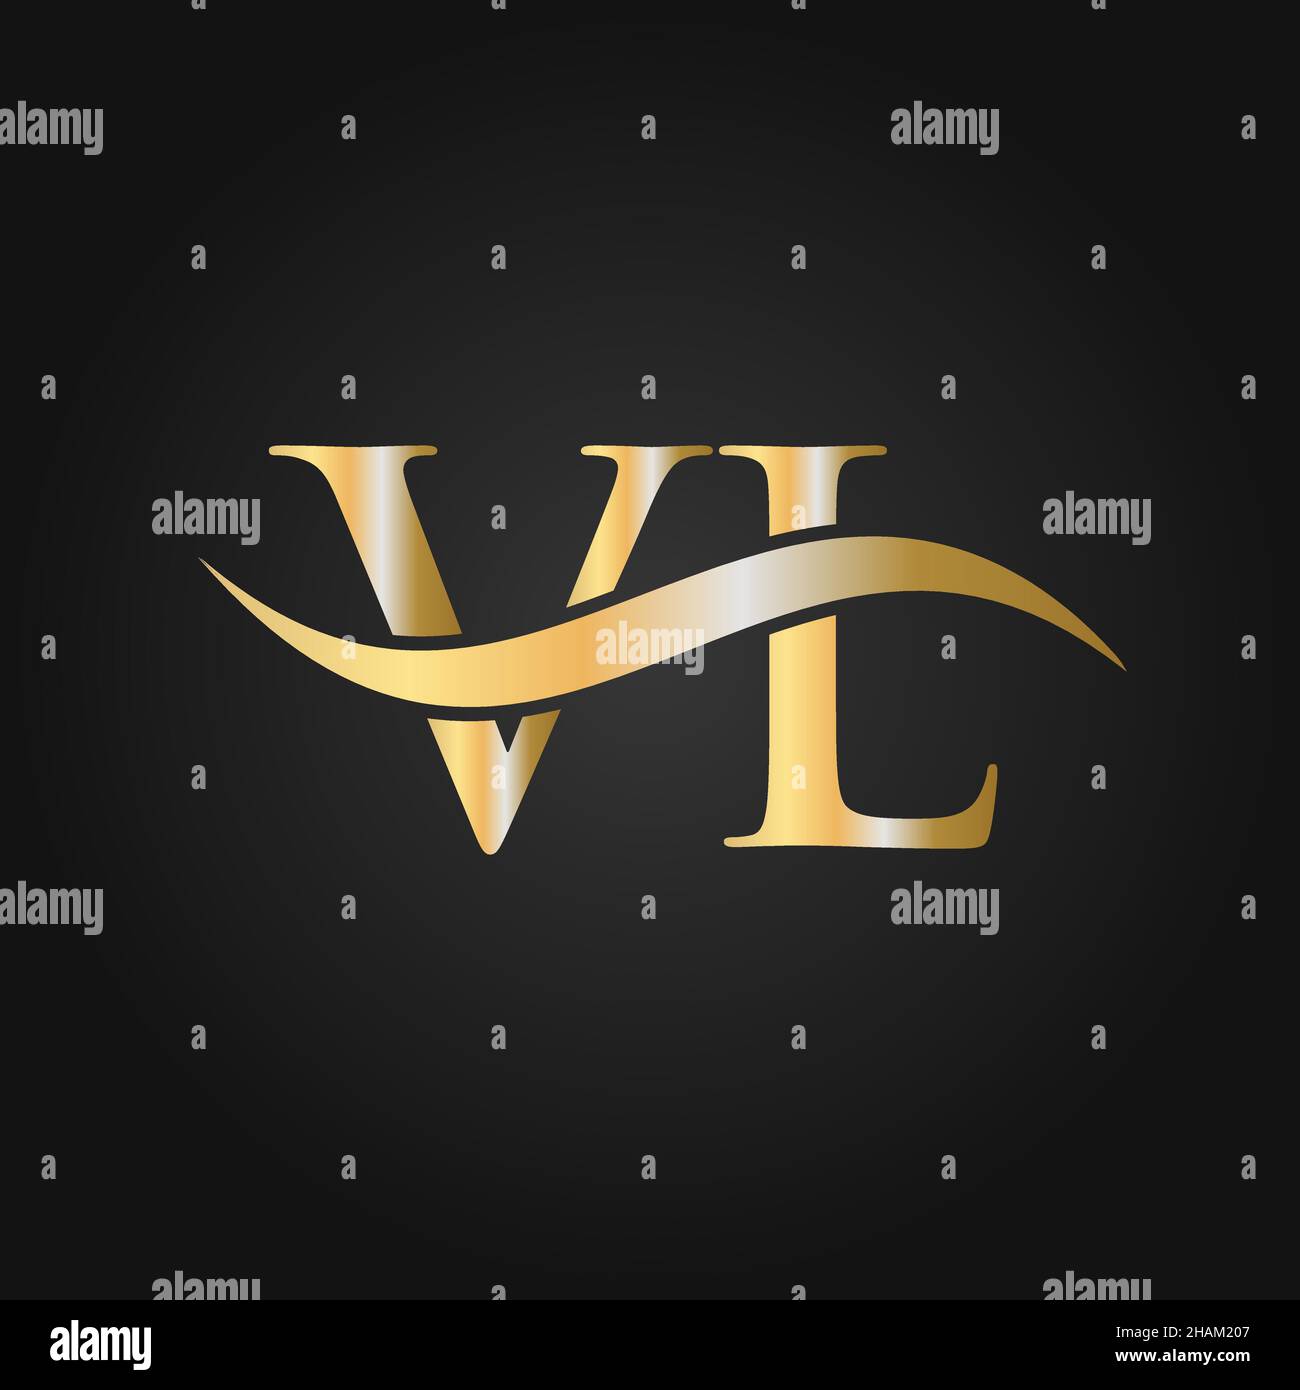 Profesional Letter VL Logo for Real Estate - UpLabs